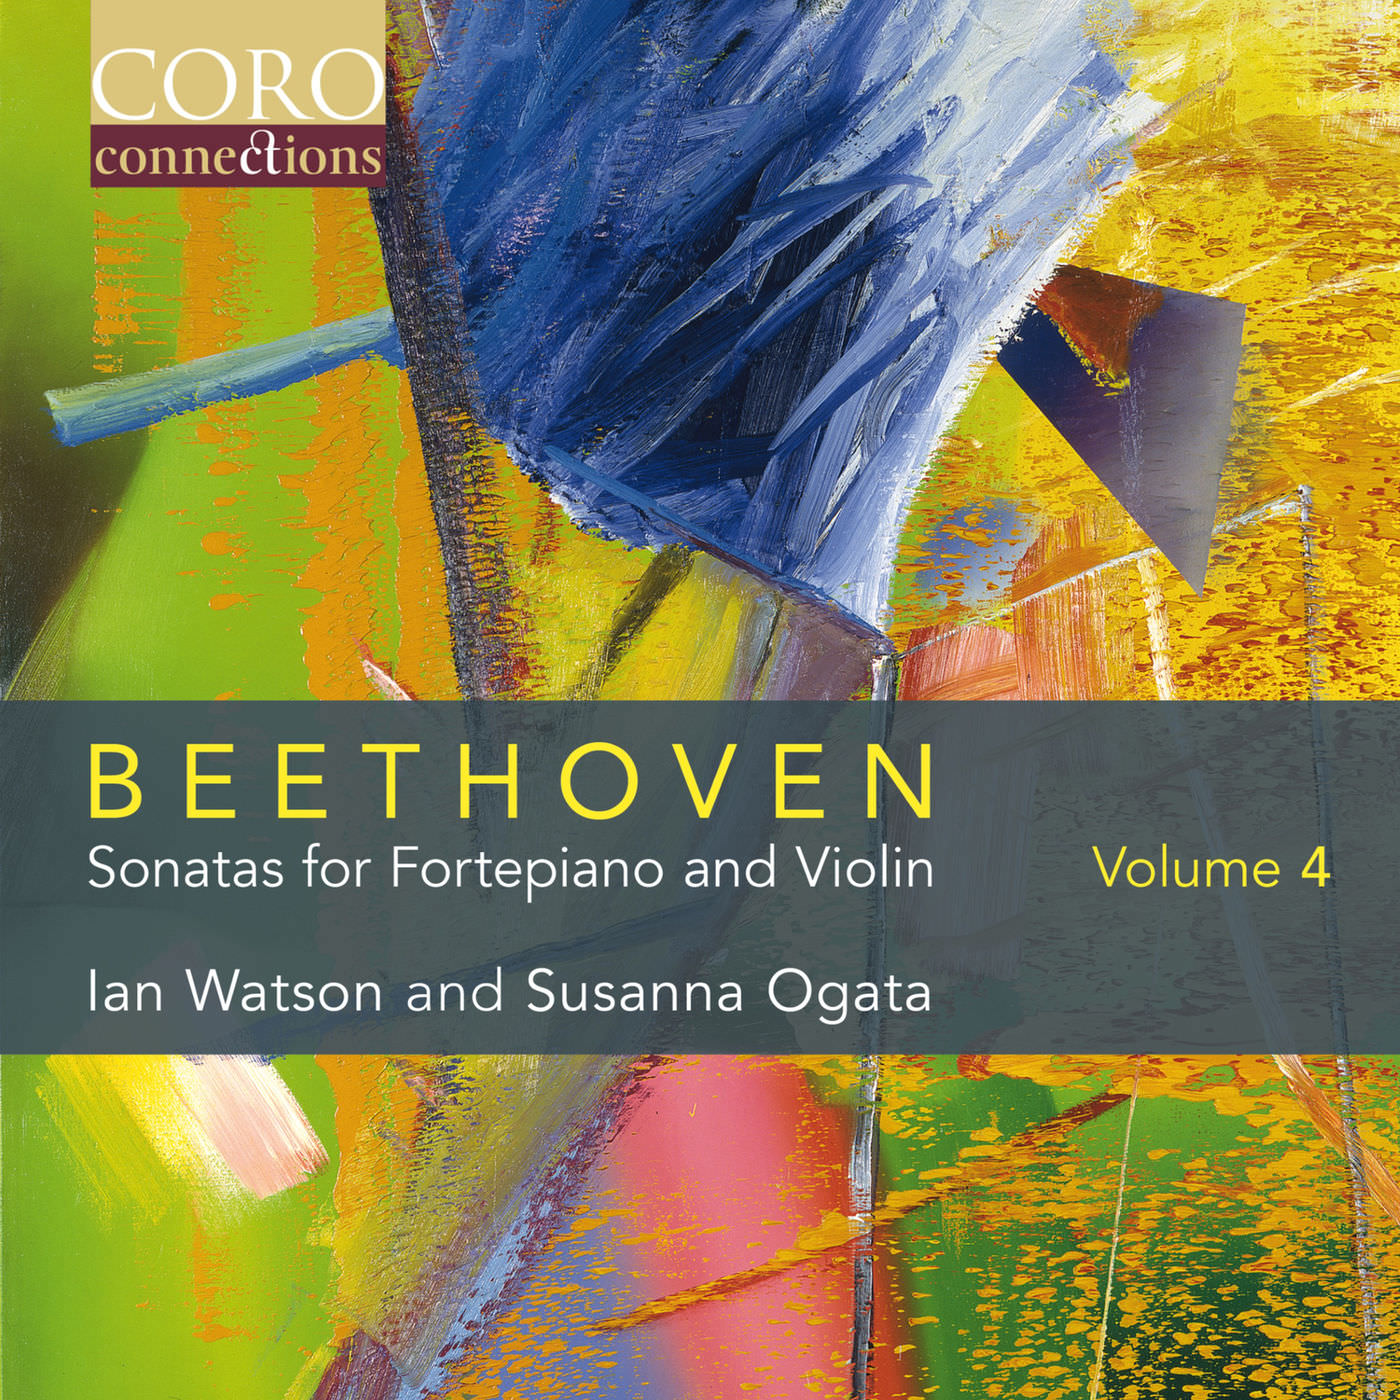 Ian Watson & Susanna Ogata - Beethoven: Sonatas for Fortepiano and Violin Volume 4 (2018) [FLAC 24bit/96kHz]